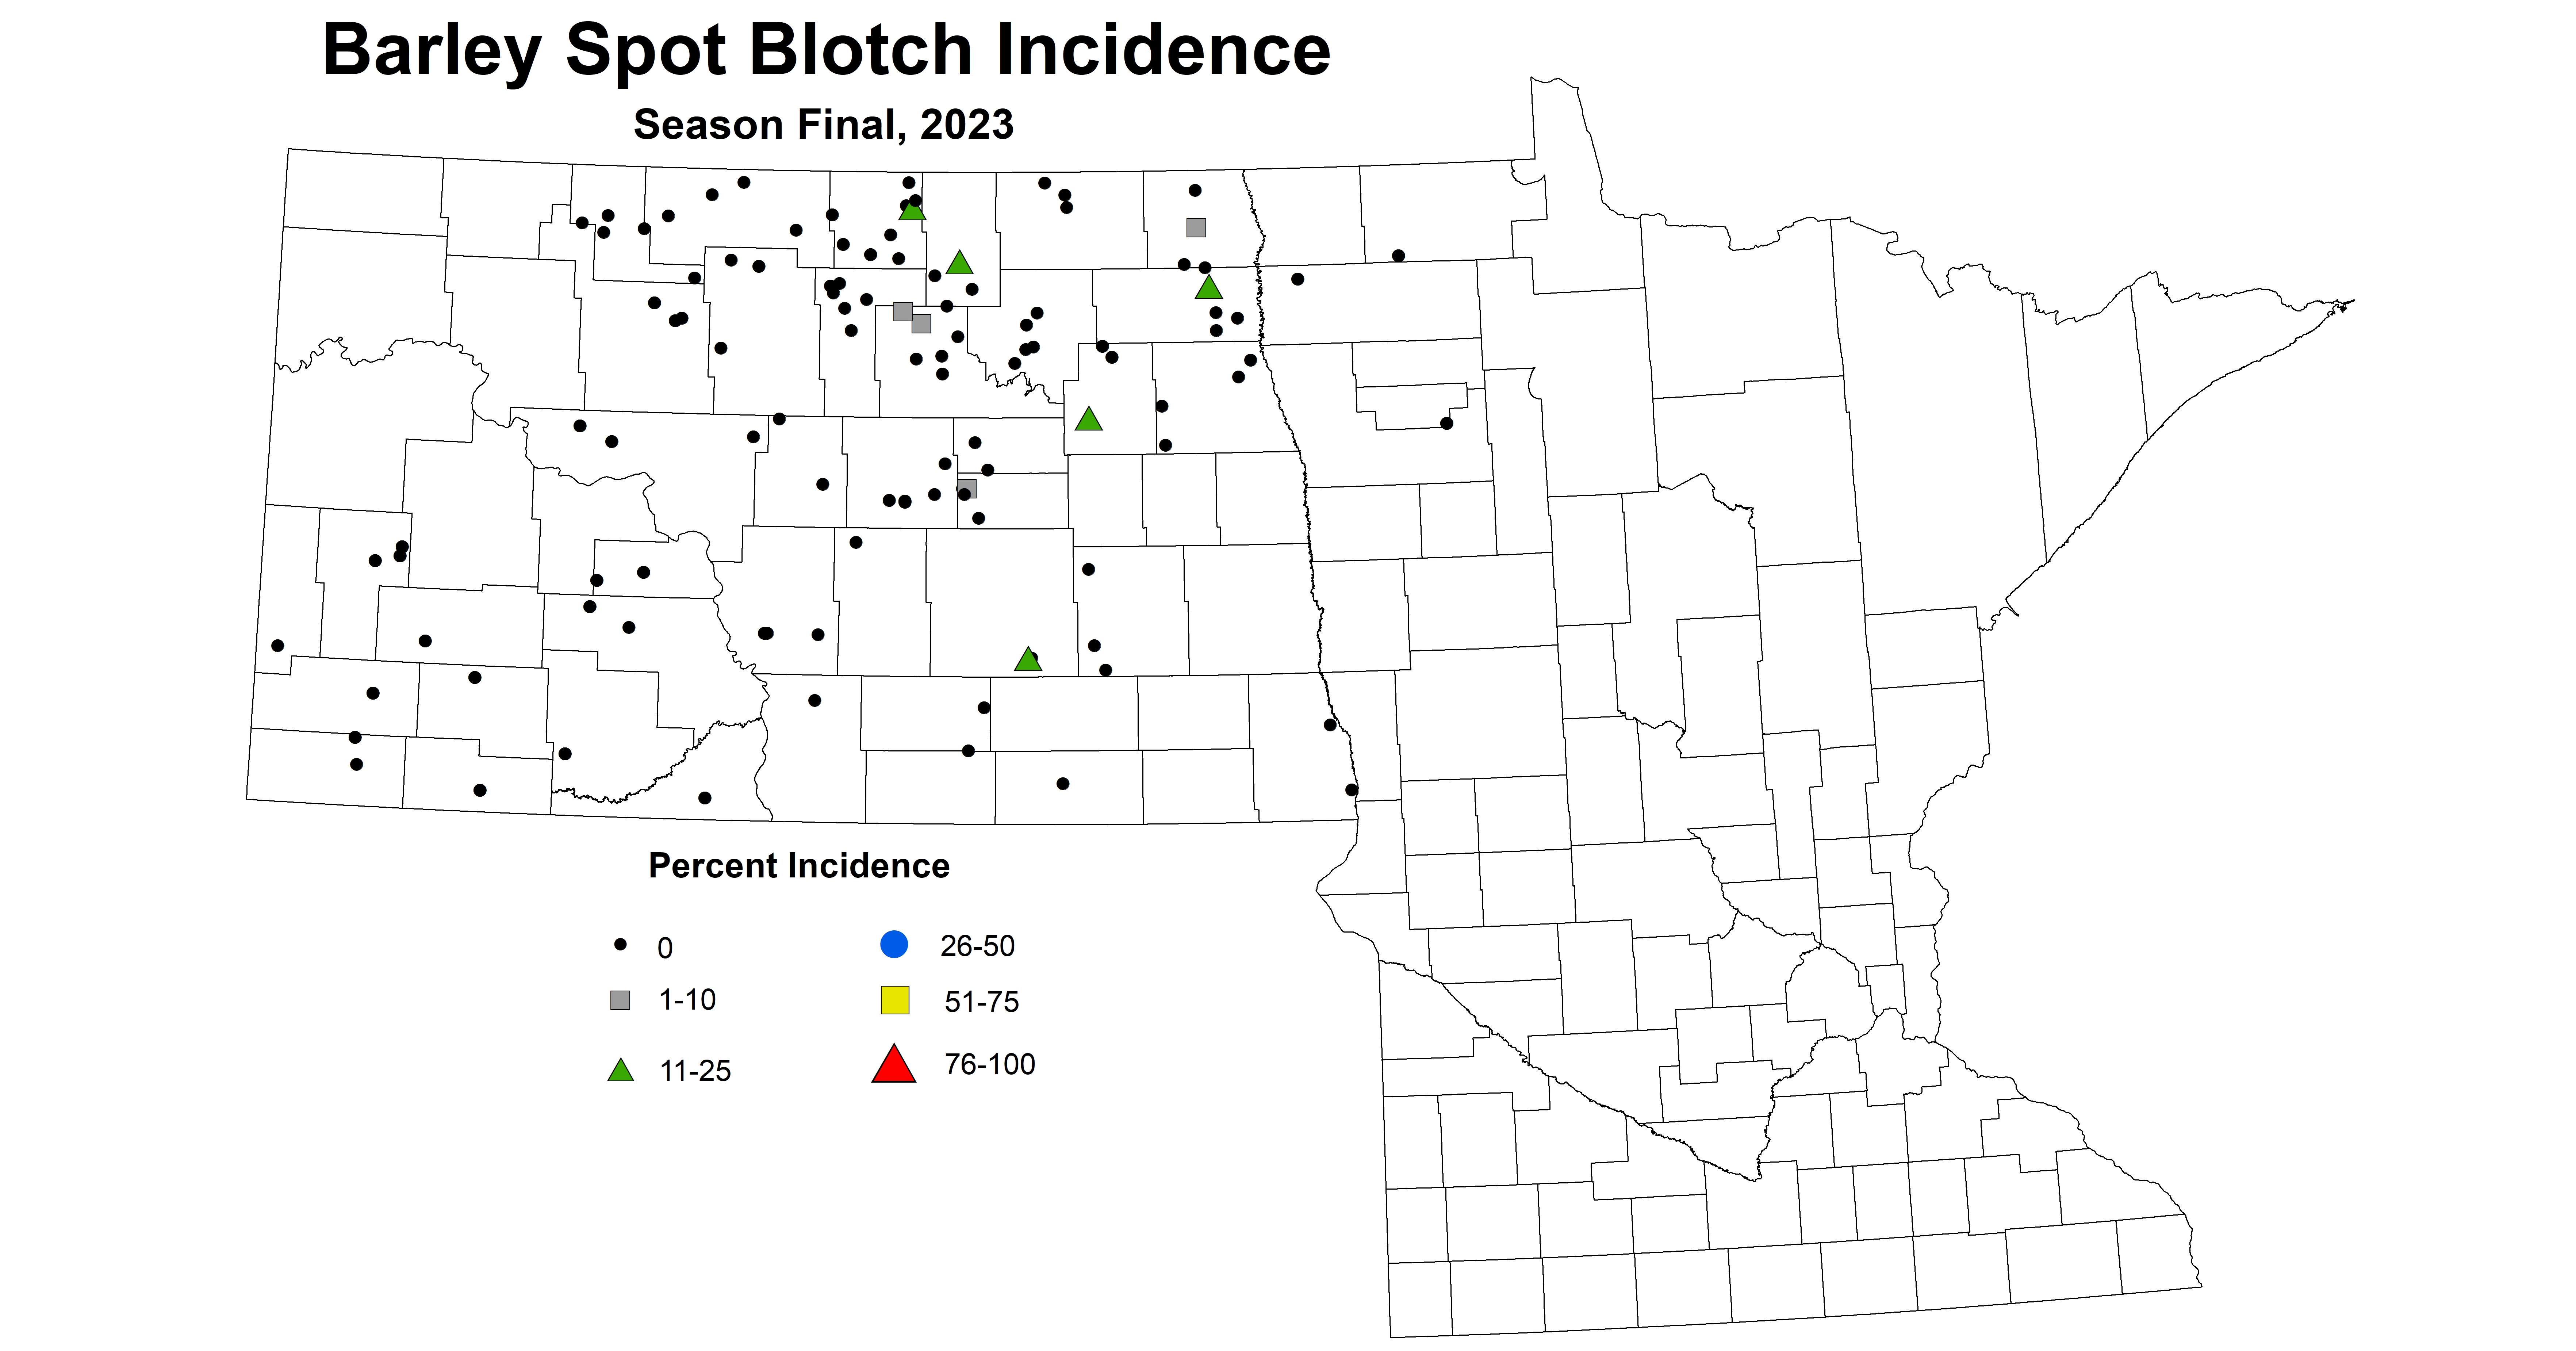 barley spot blotch incidence season final 2023